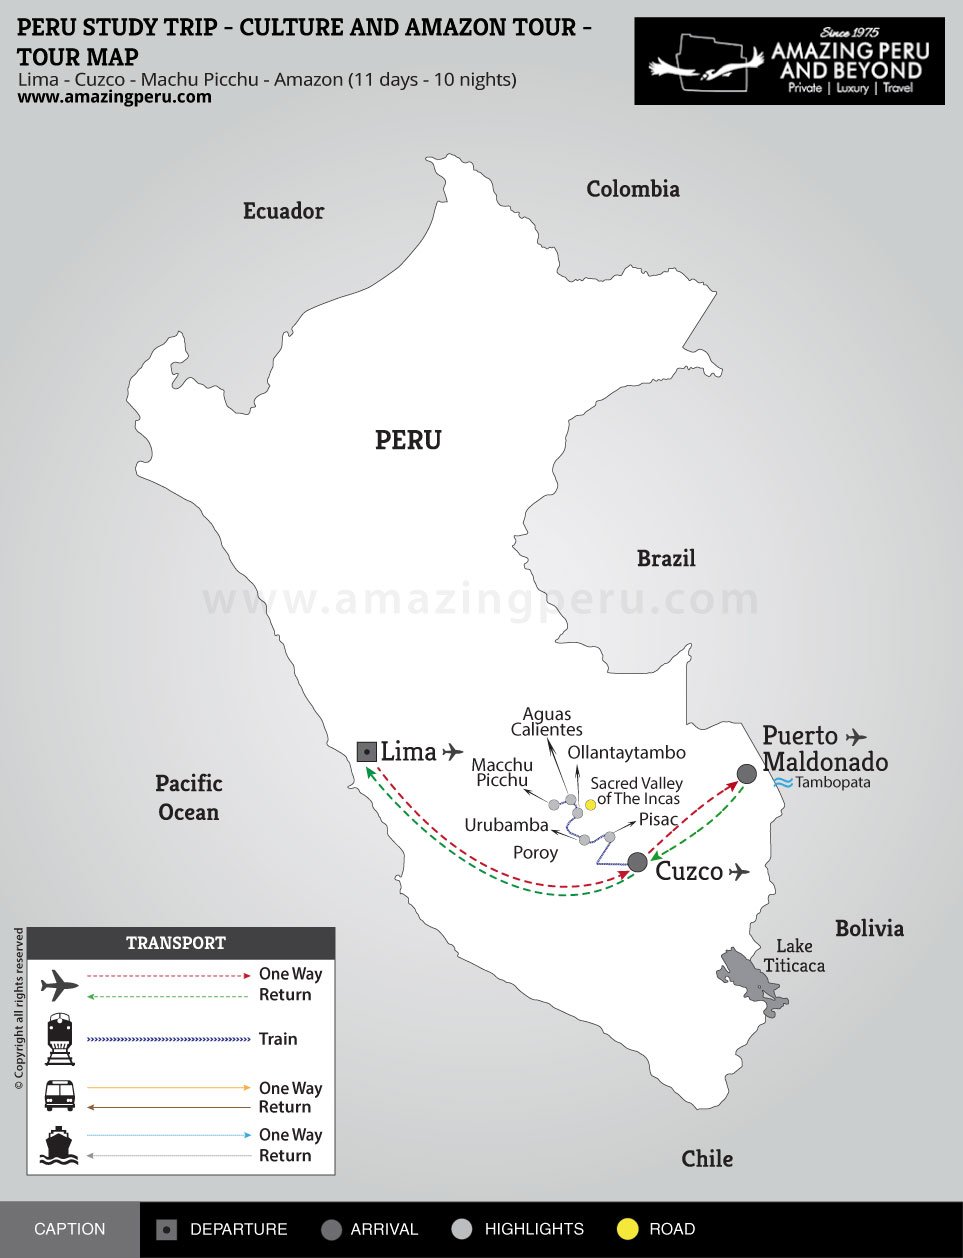 Peru Study Trip - Culture and Amazon Tour - 11 days / 10 nights.